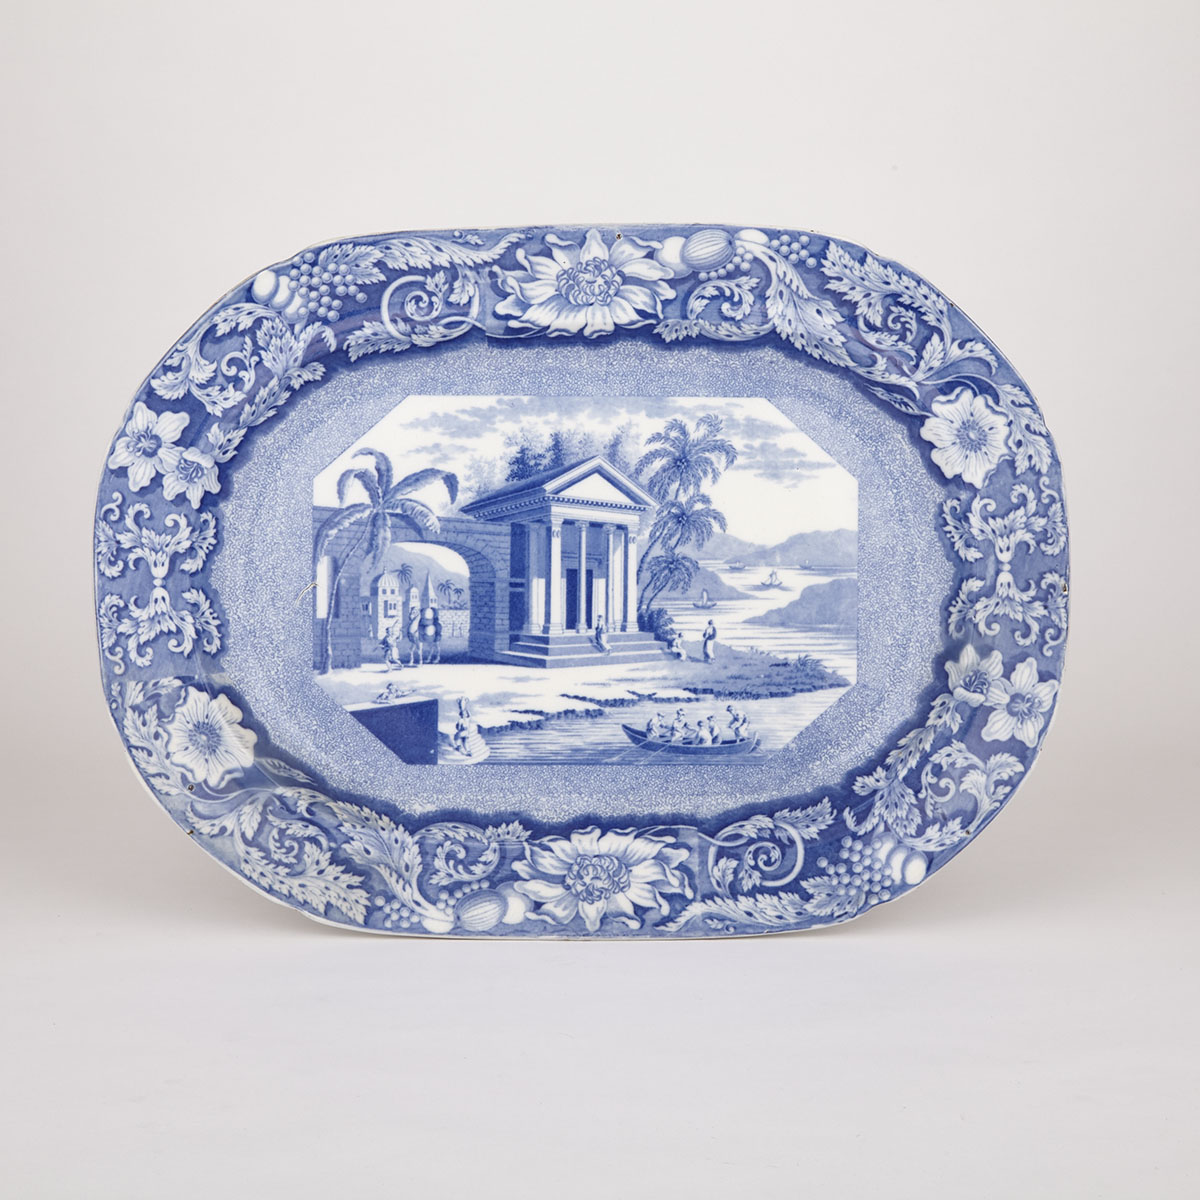 Staffordshire Blue-Printed ‘Palladian Porch’ Pattern Platter, c.1820-30